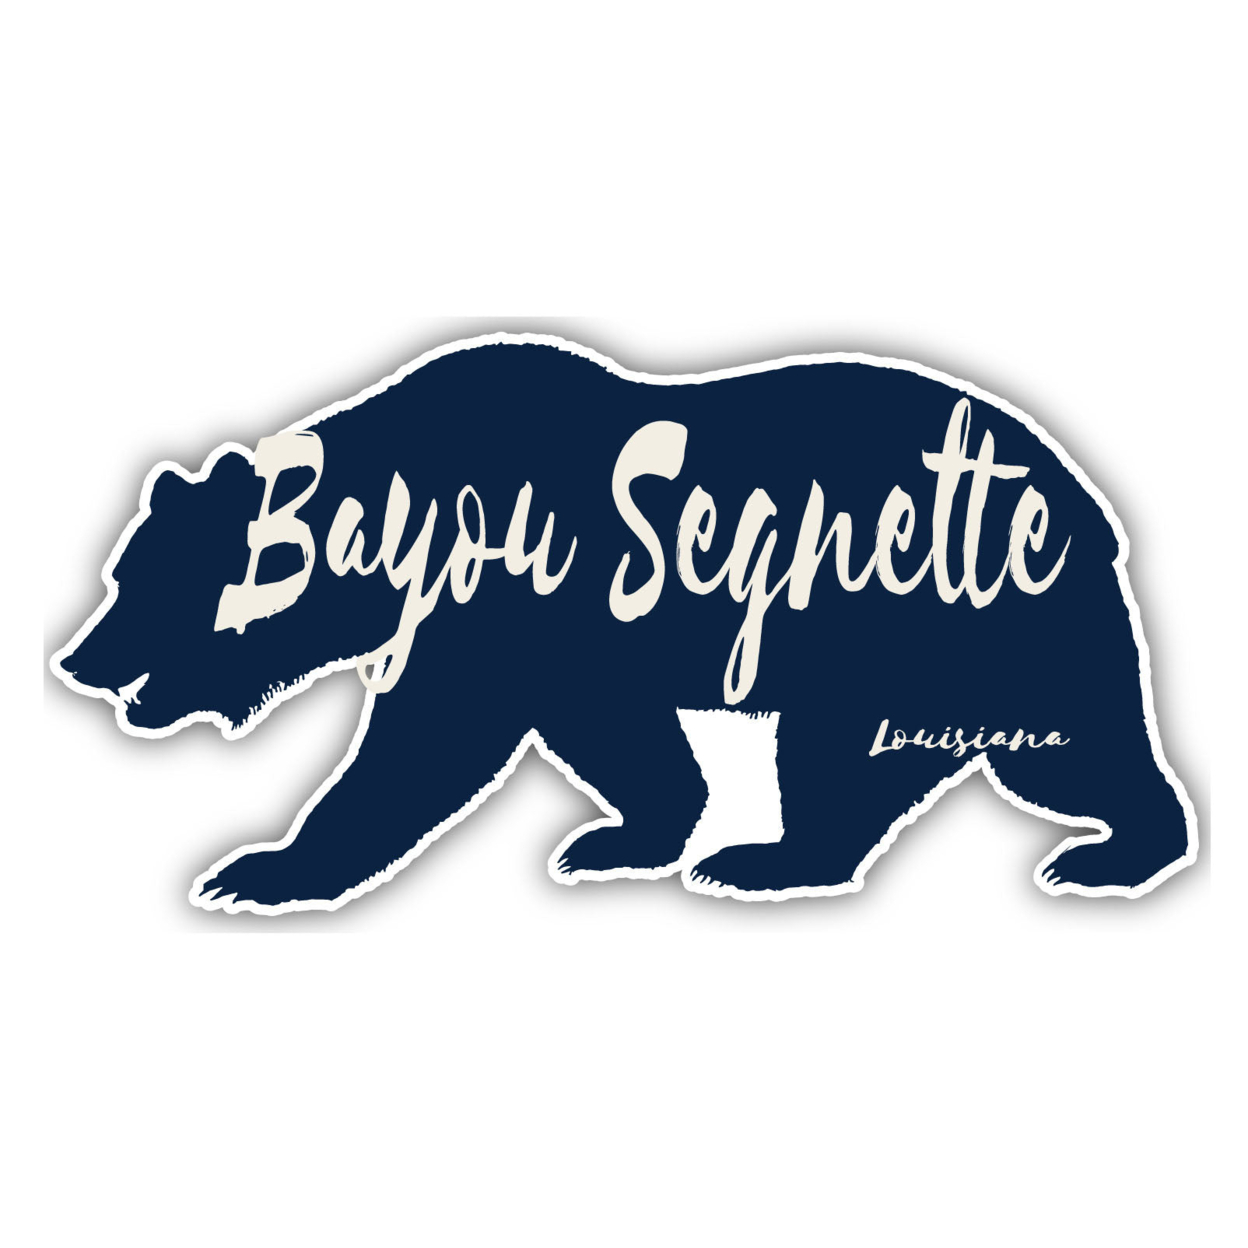 Bayou Segnette Louisiana Souvenir Decorative Stickers (Choose Theme And Size) - 4-Pack, 8-Inch, Bear